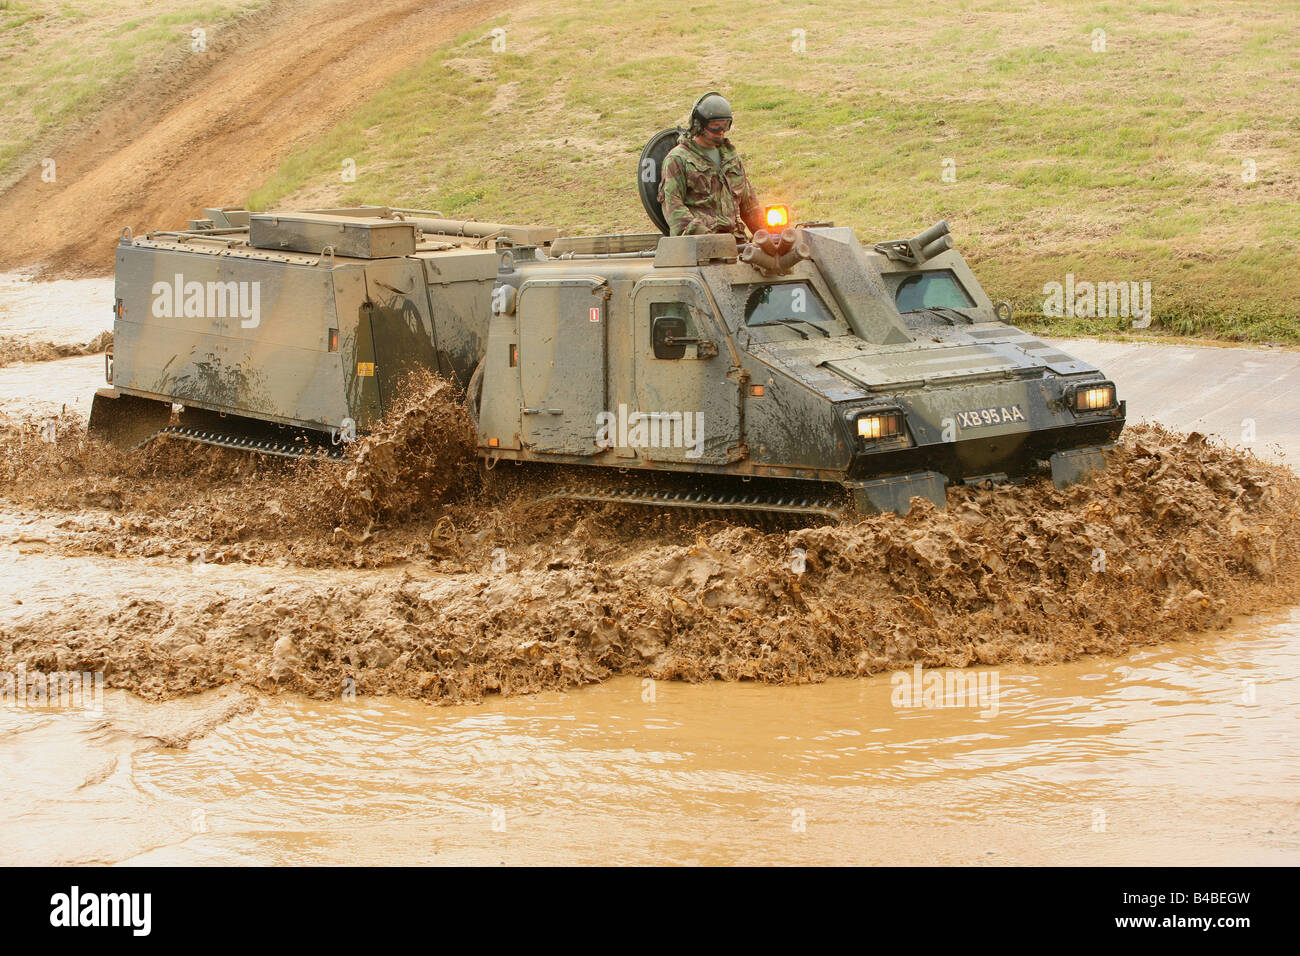 Ein Wikinger-Armee-Fahrzeug in Aktion Stockfoto